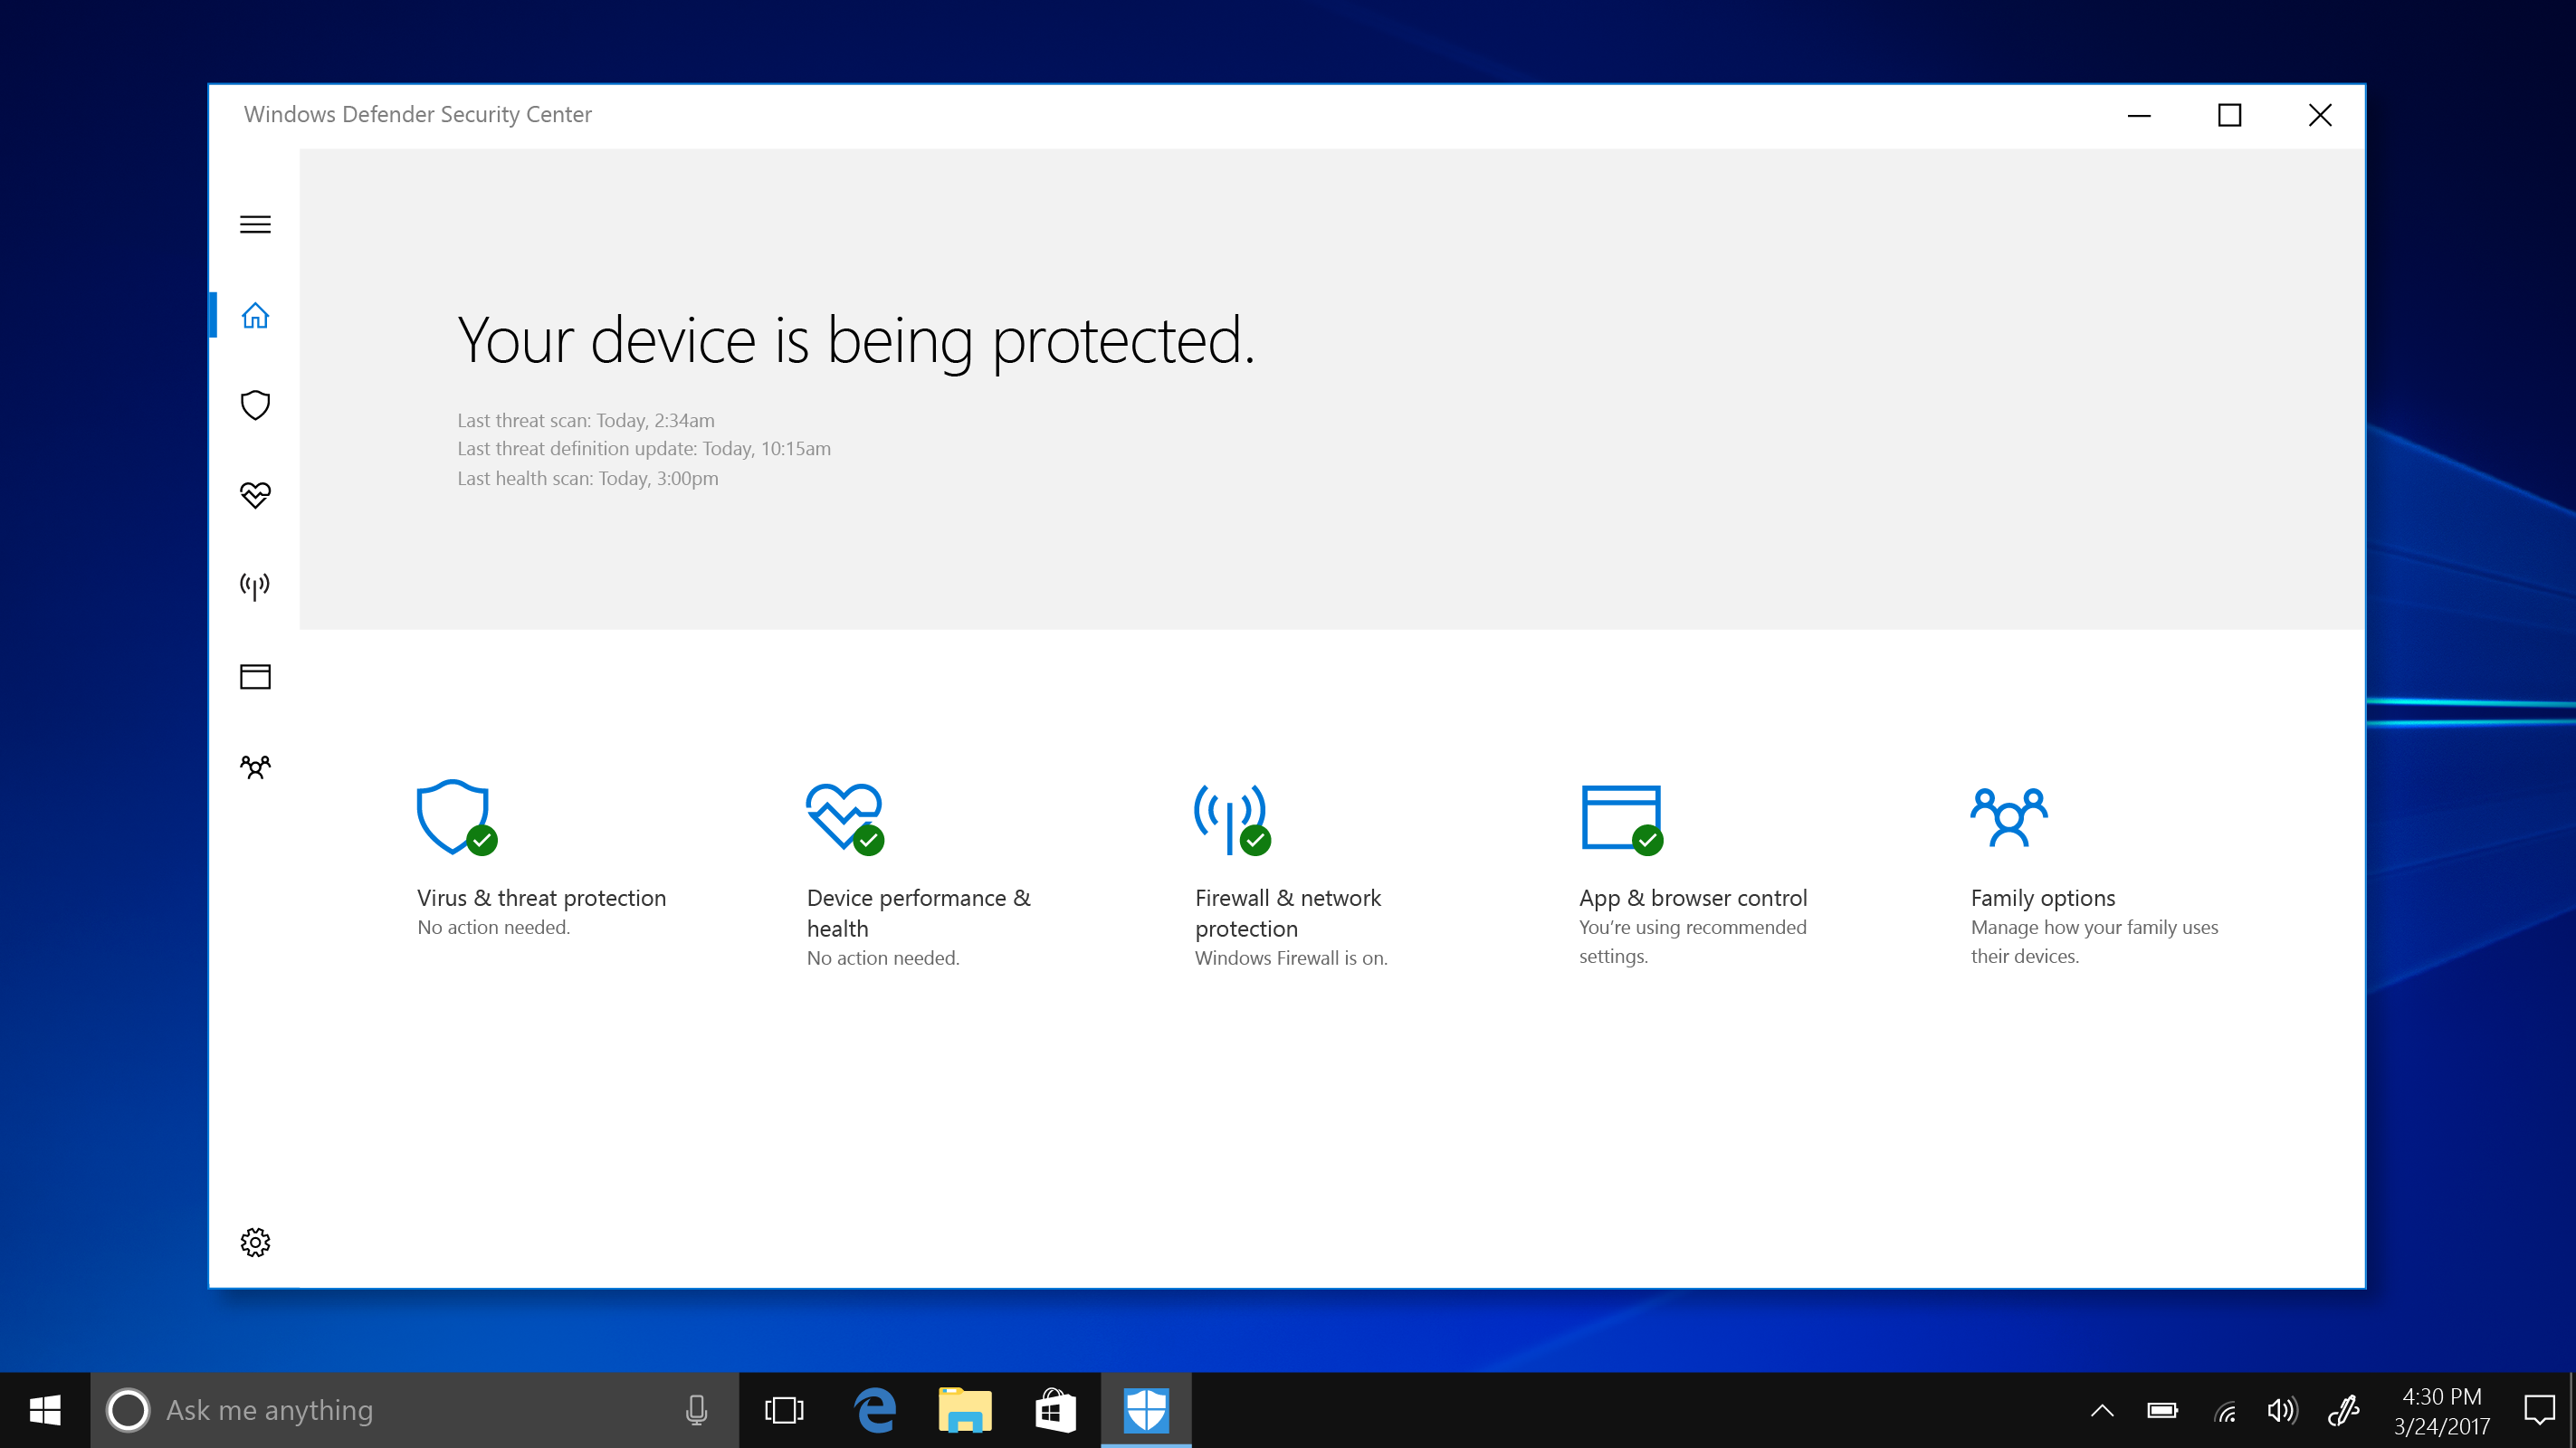 Windows Defender Security Center shown on Windows 10 S